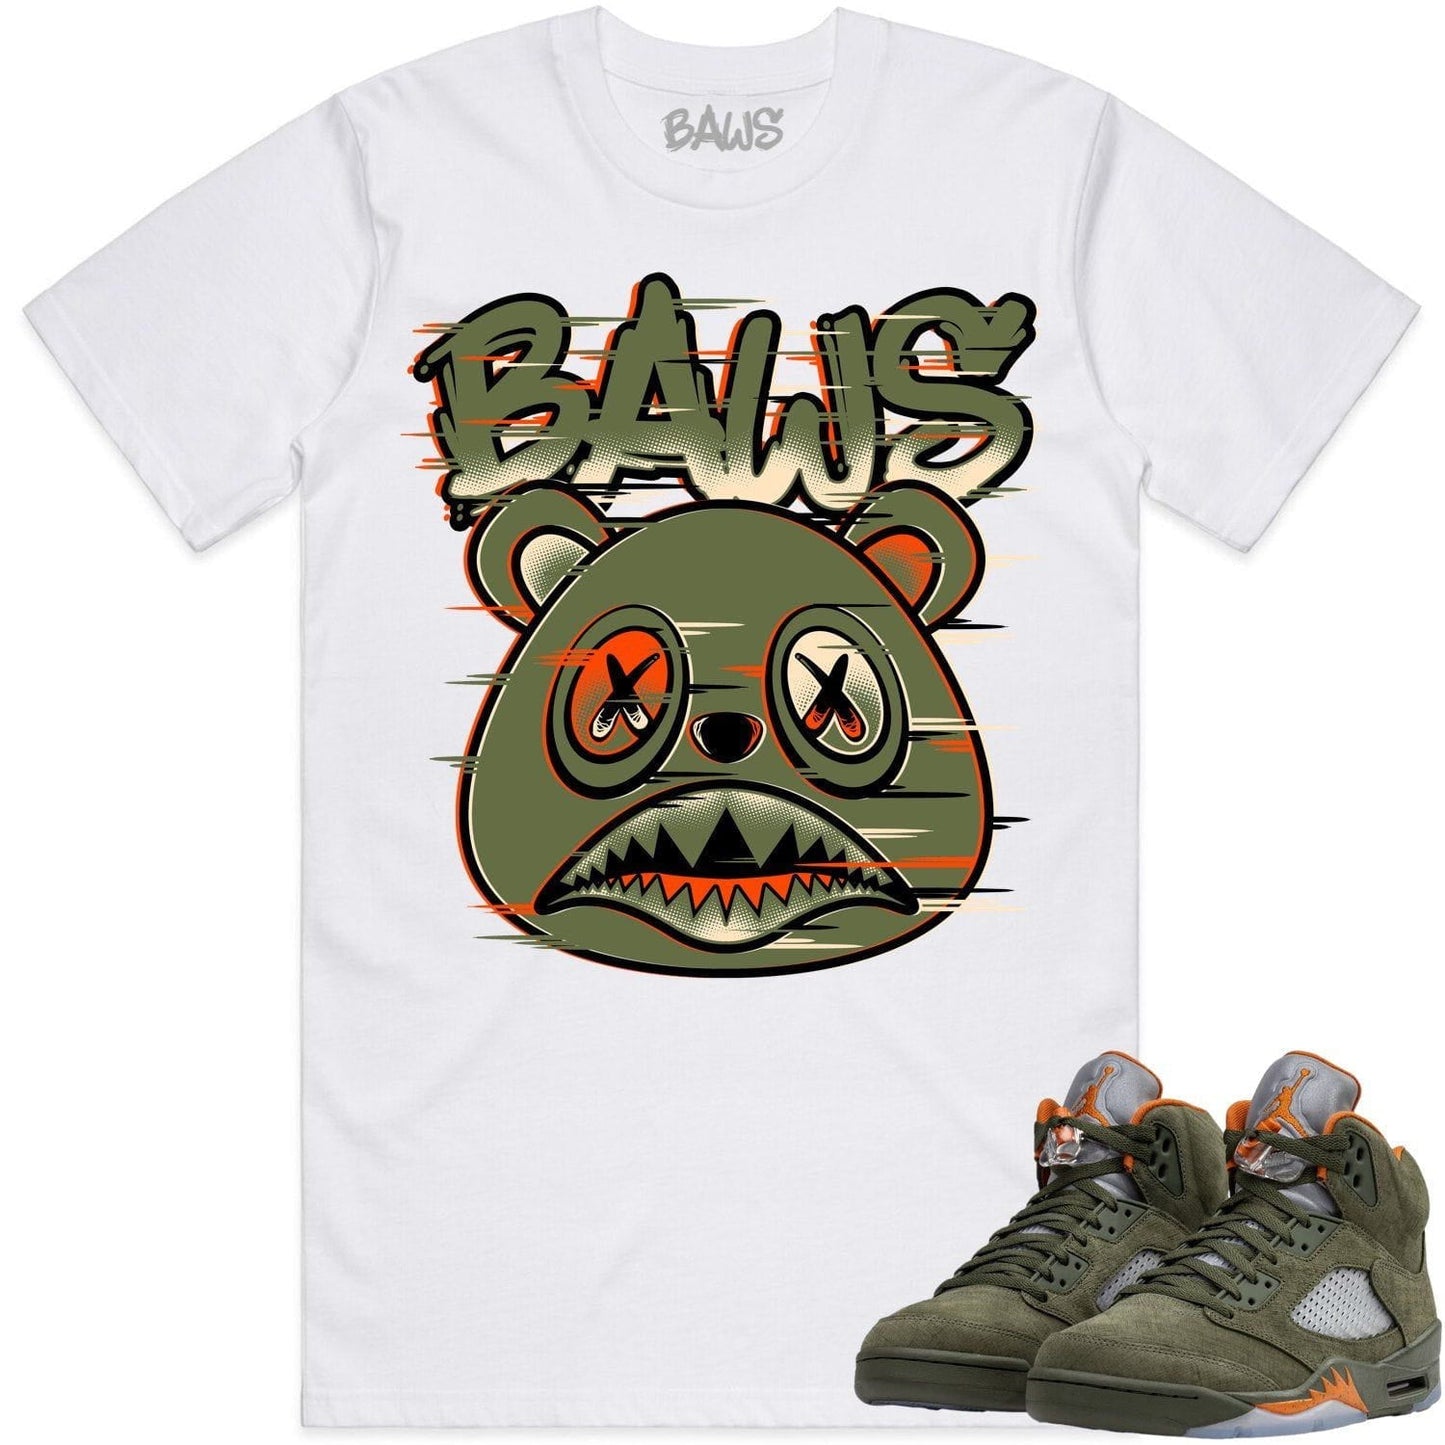 Olive 5s Shirts - Jordan 5 Olive 5s Sneaker Tees - Glitch Baws Bear